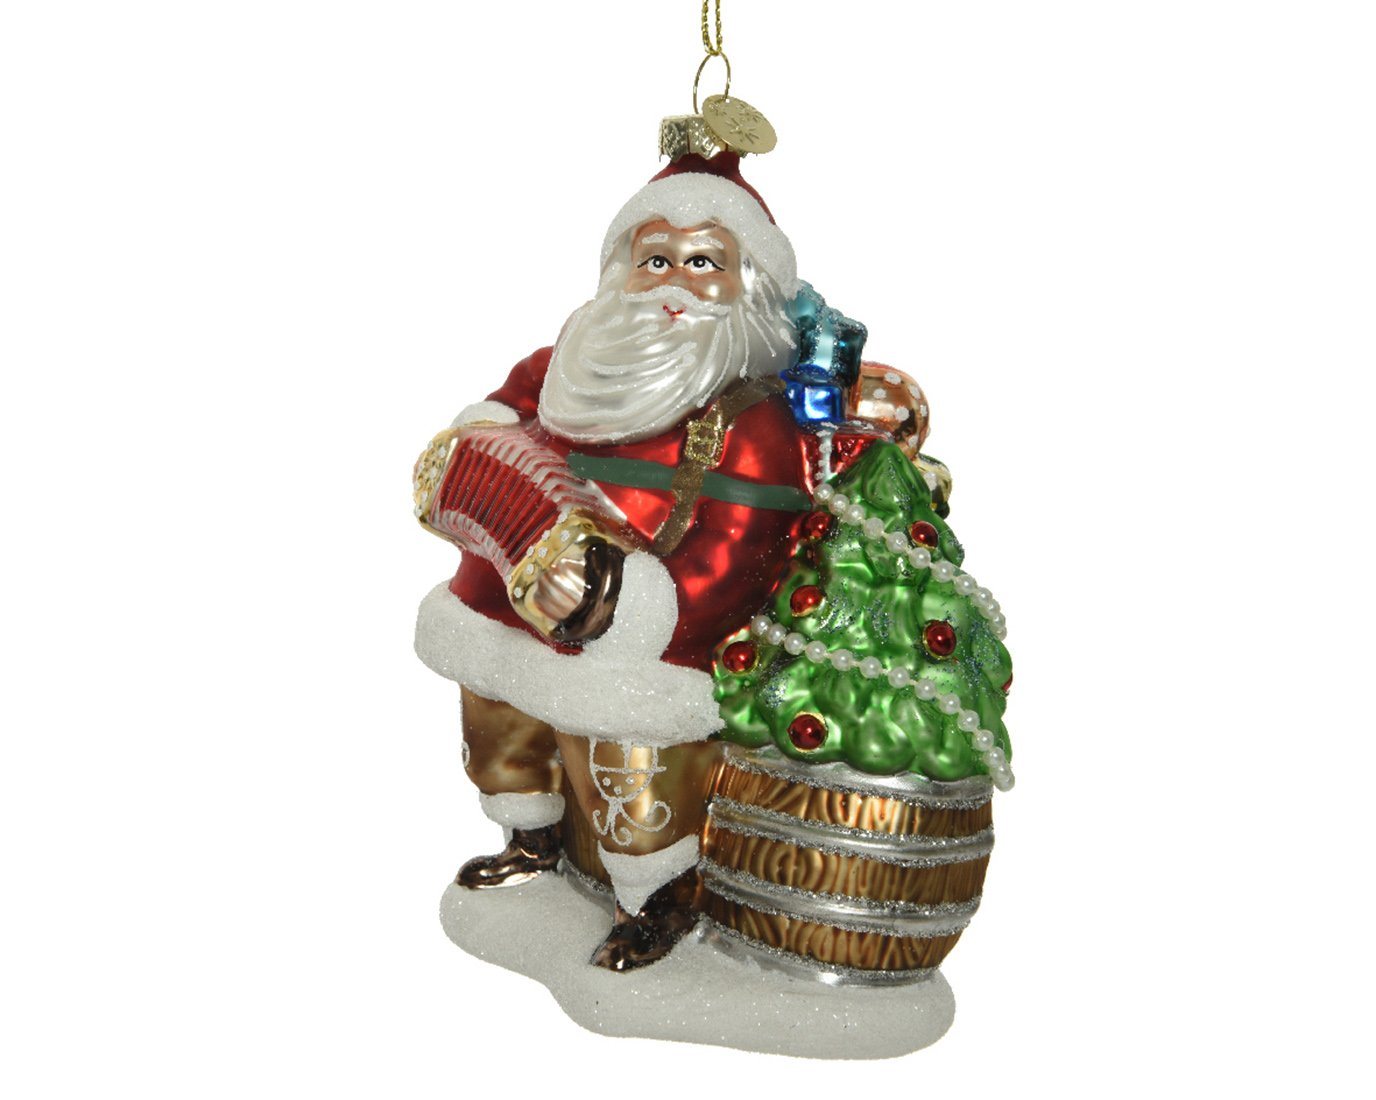 Decoris season decorations Christbaumschmuck, Christbaumschmuck Glas Weihnachtsmann mit Weihnachtsbaum 15cm rot von Decoris season decorations